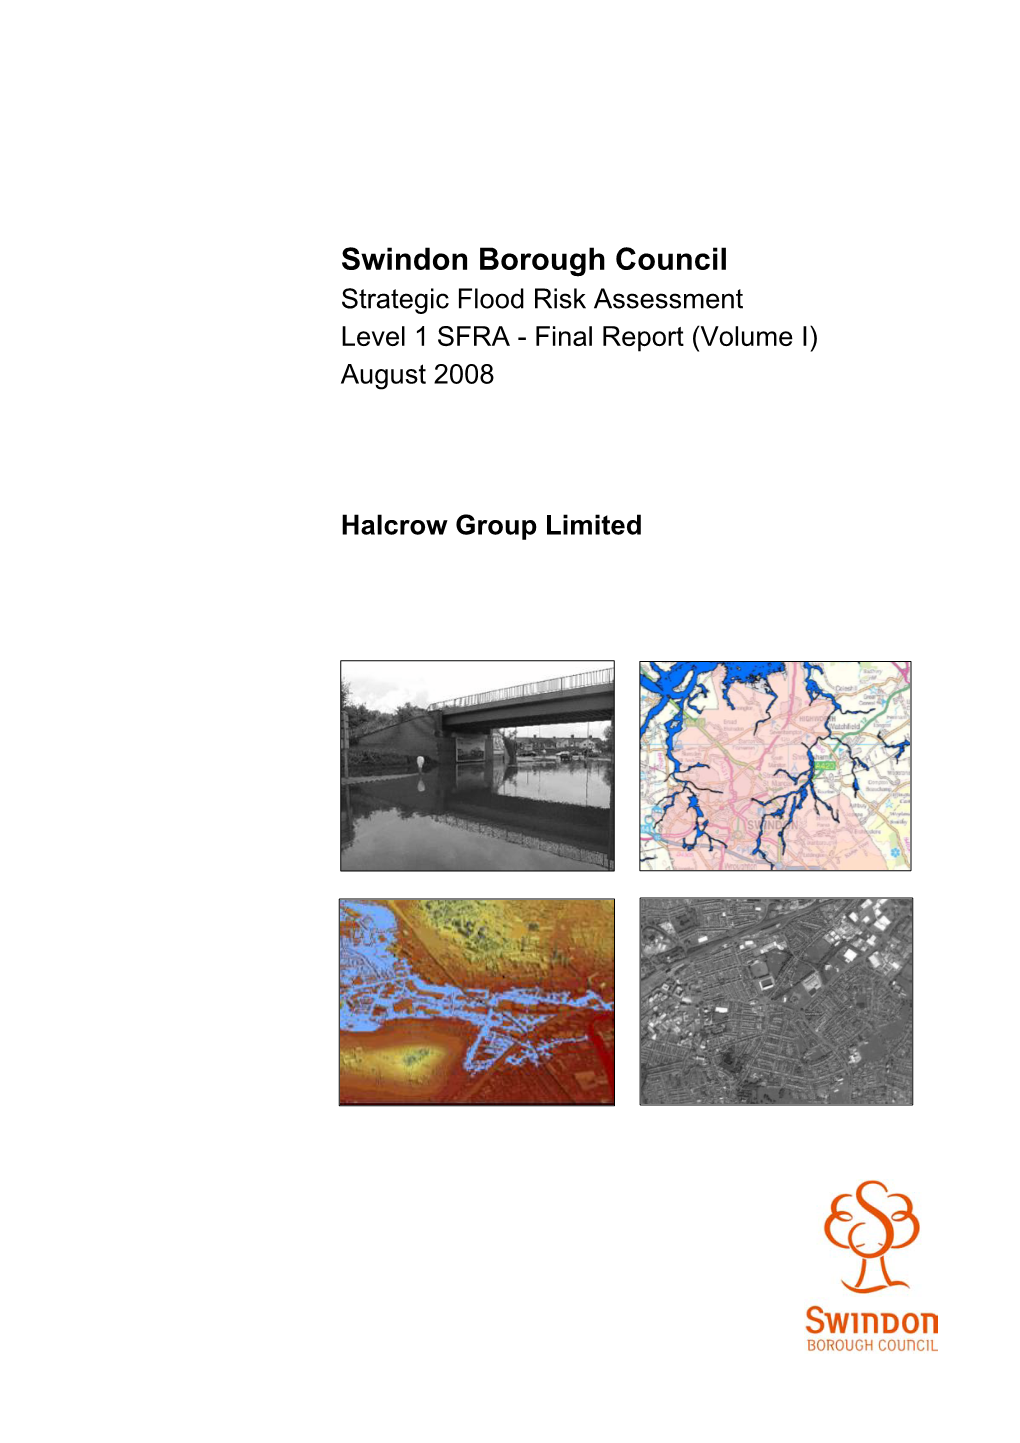 Swindon Borough Council Strategic Flood Risk Assessment Level 1 SFRA - Final Report (Volume I) August 2008